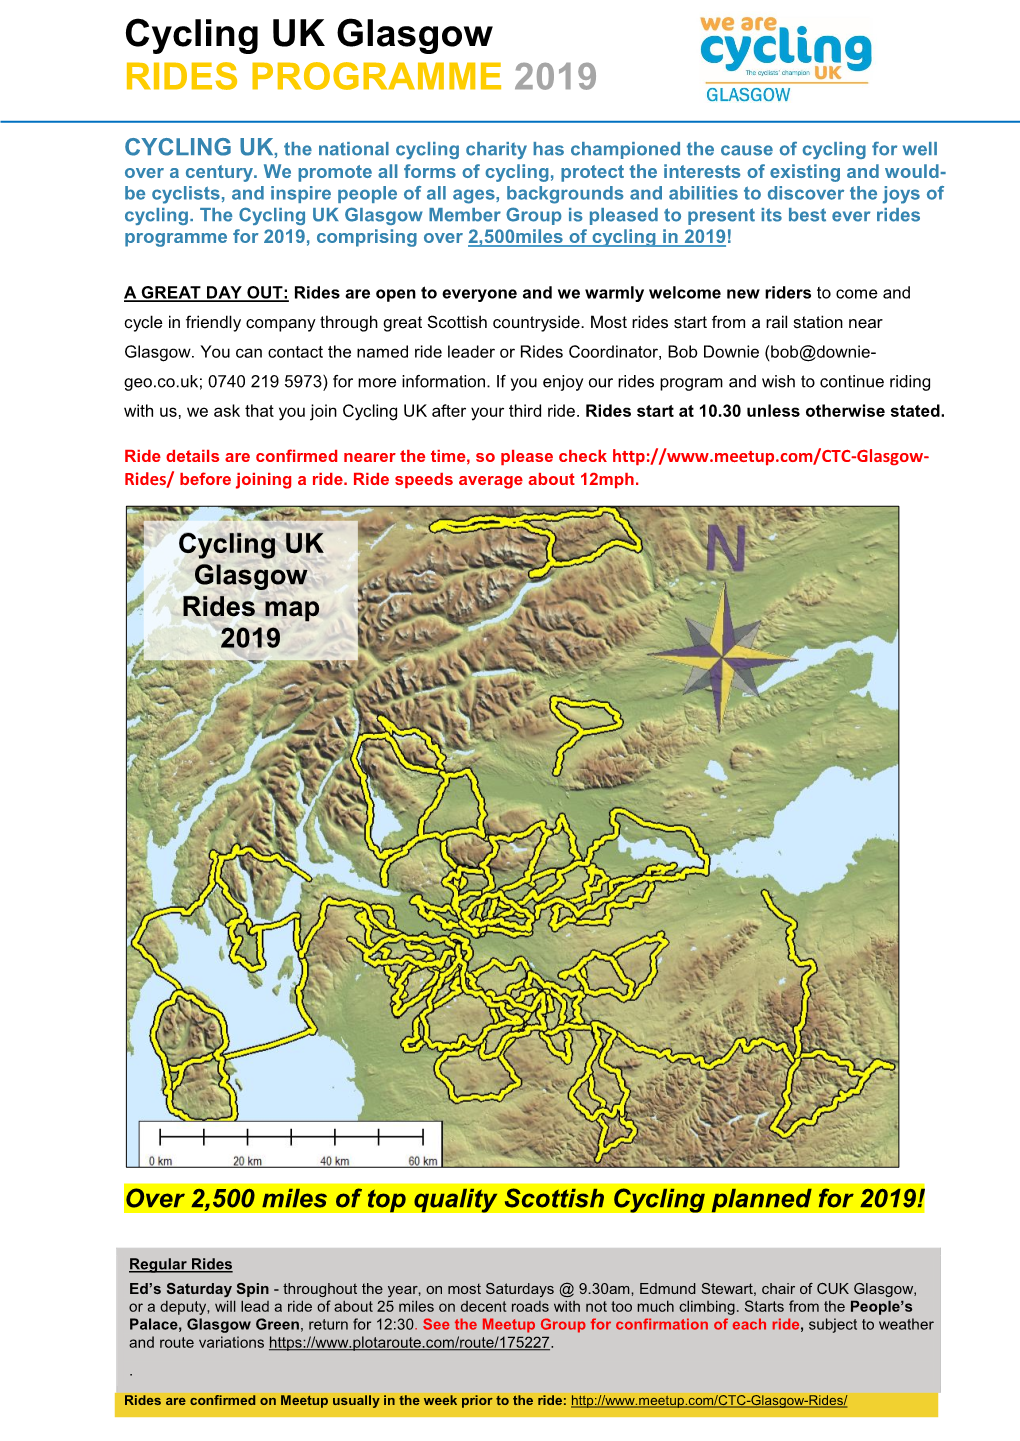 Cycling UK Glasgow RIDES PROGRAMME 2019